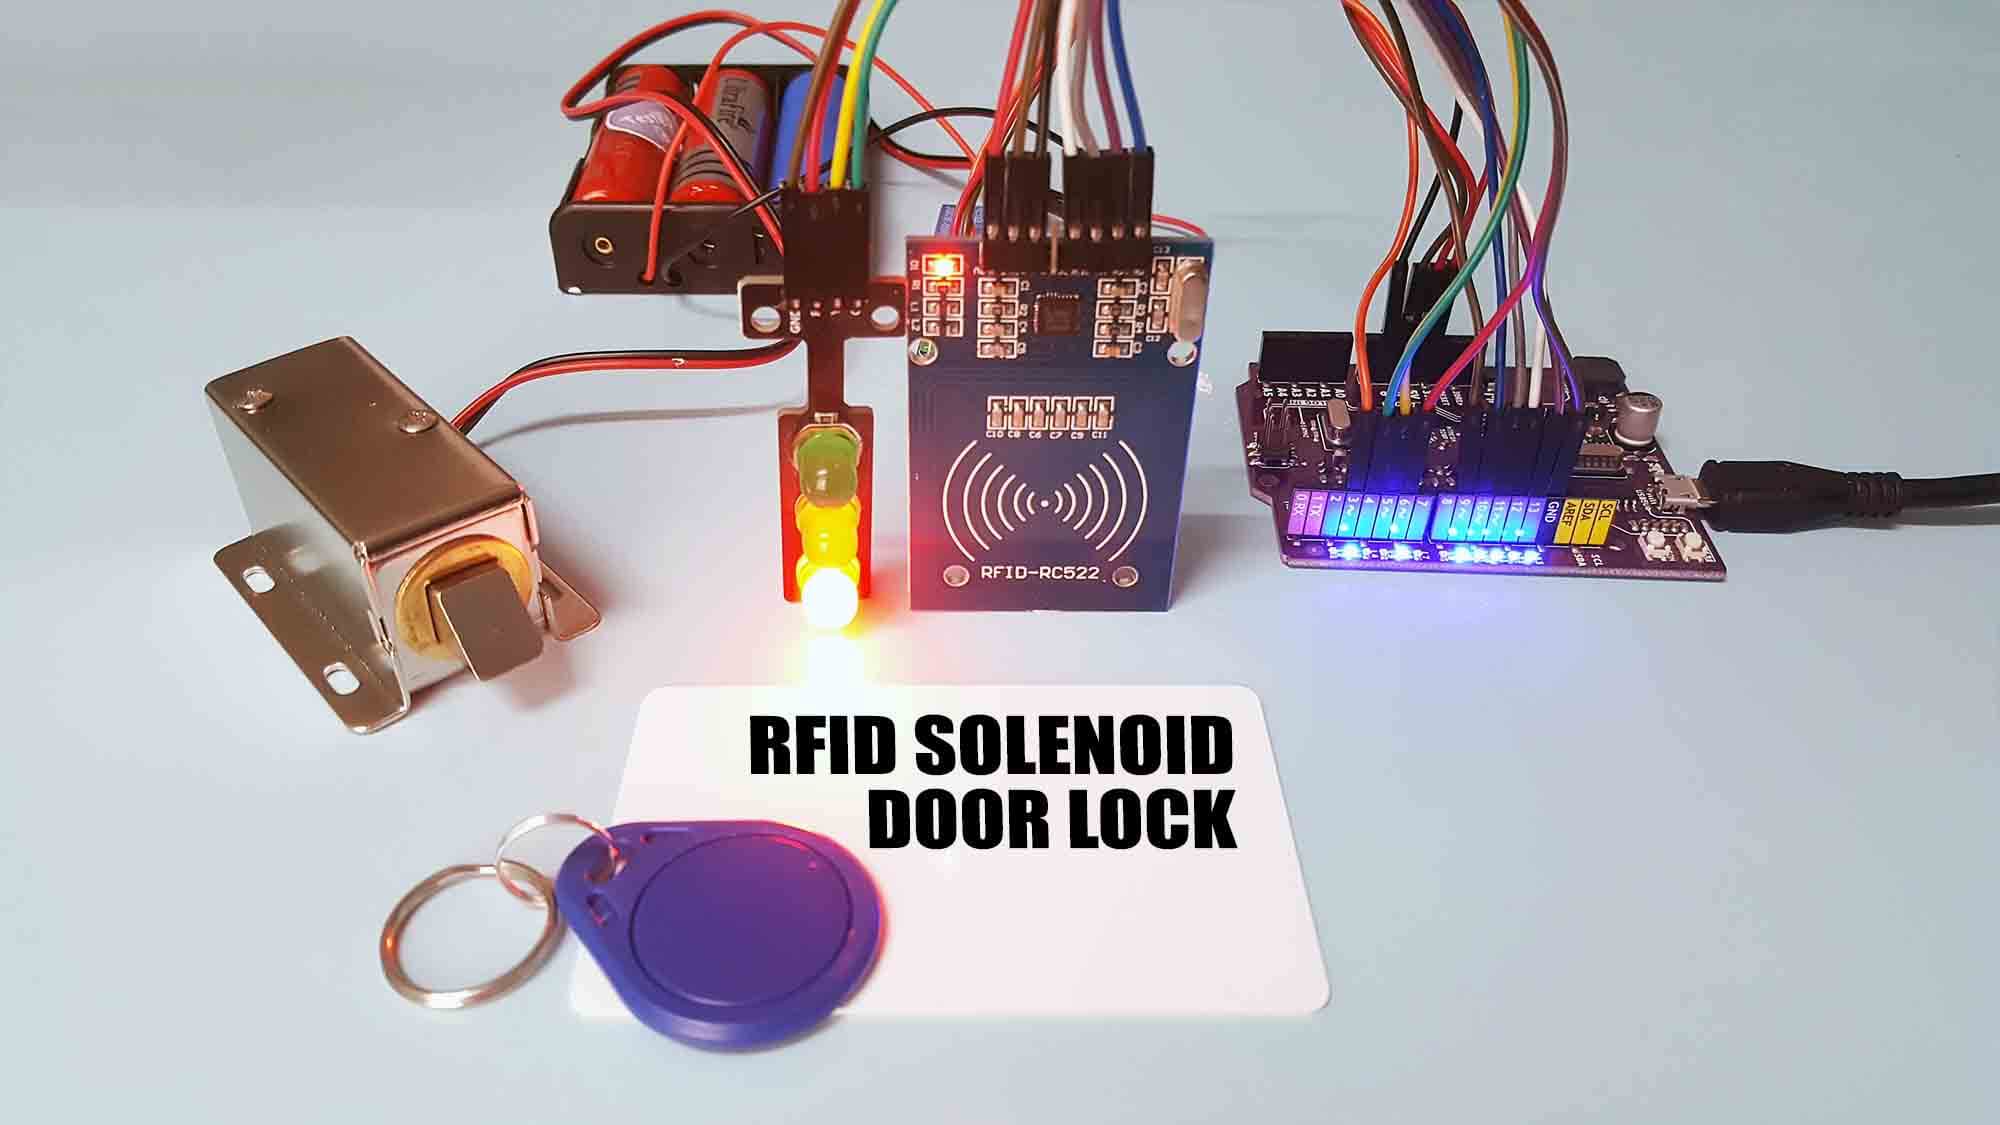 RFID Solenoid Door Lock Using Arduino